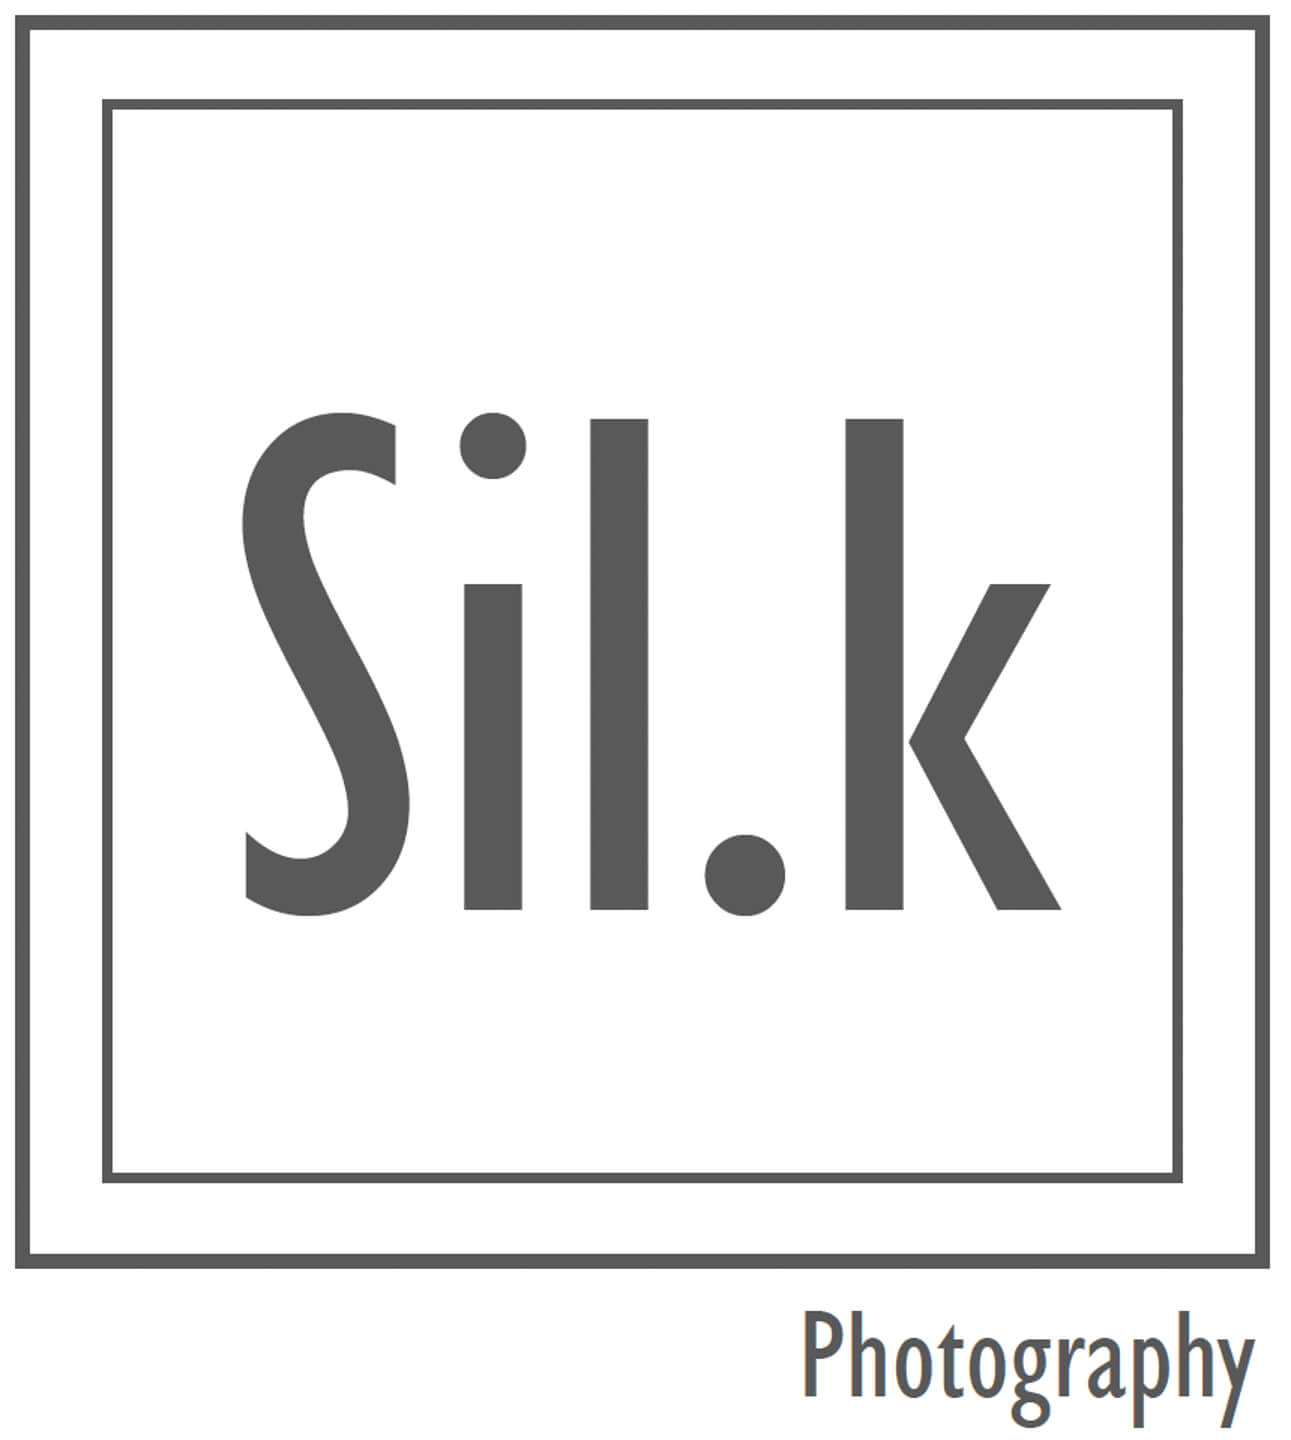 Sil.k Photography